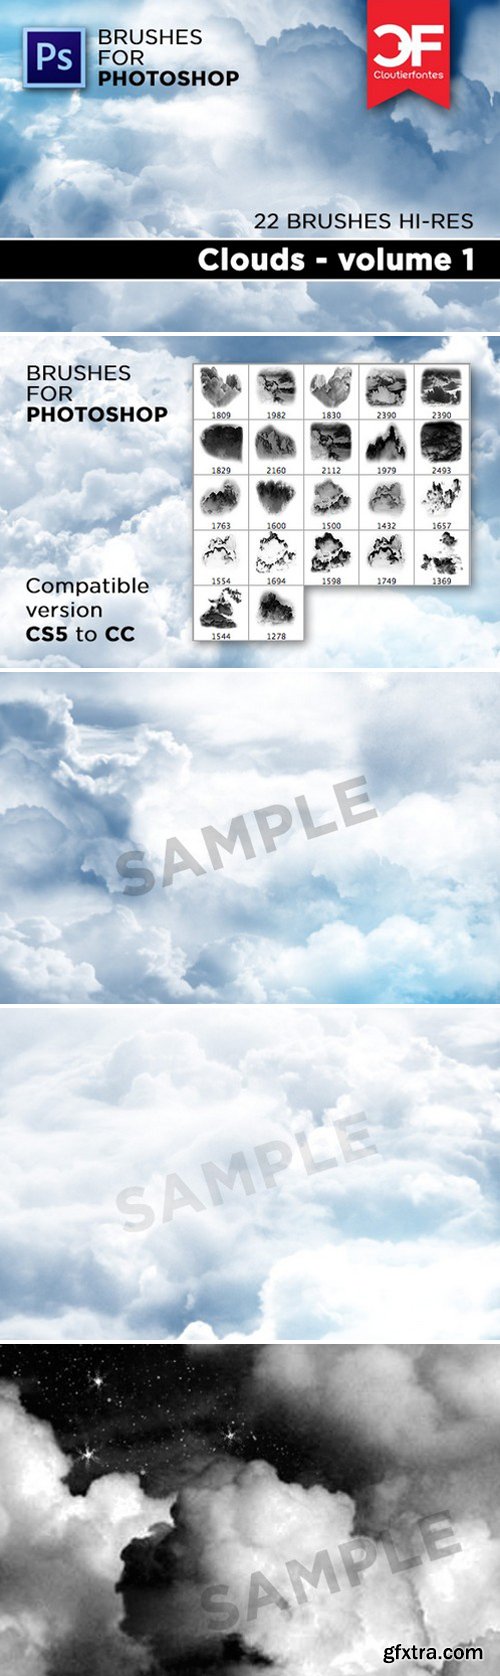 CM - Clouds brushes Volume 1 270815